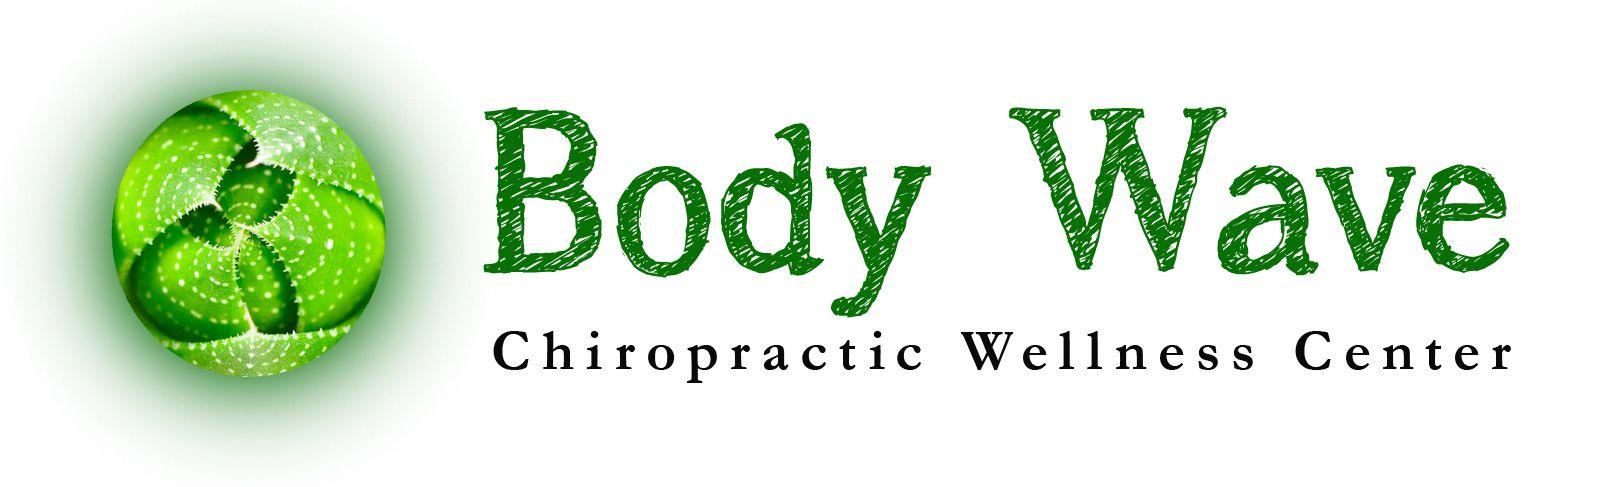 Wave Health Center Logo - Body Wave Chiropractic